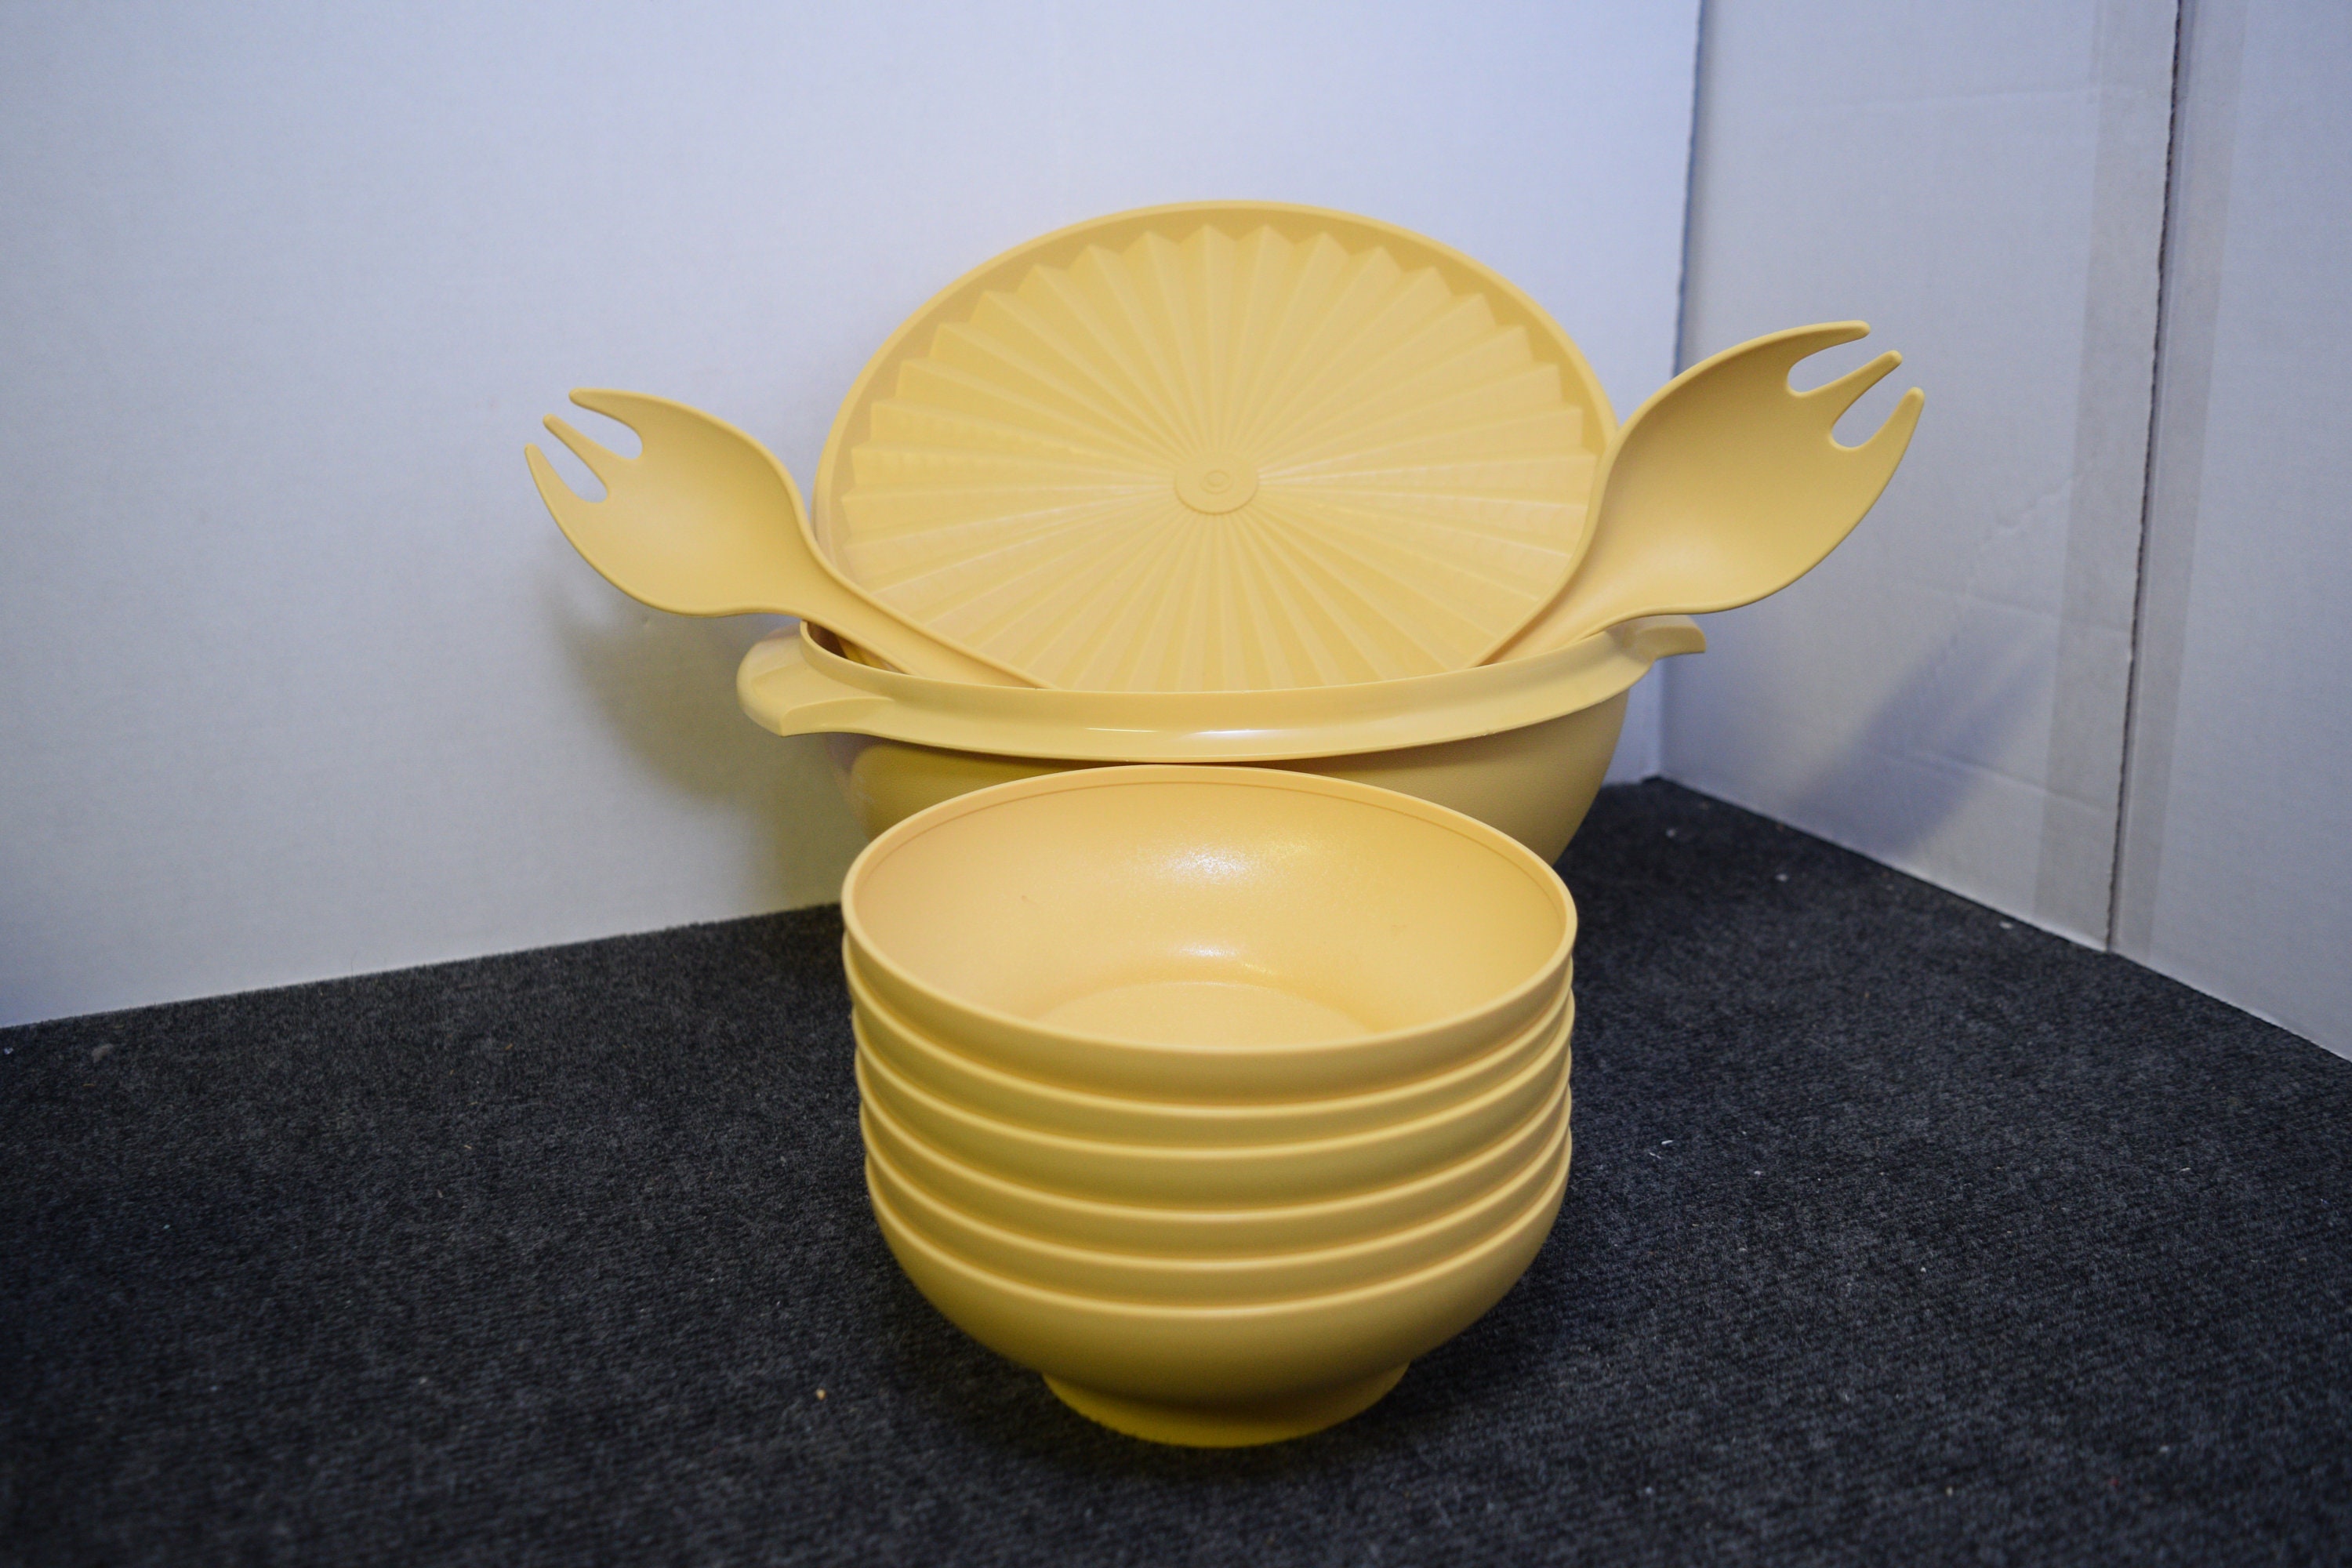 4 Vintage Tupperware 886 1323 Servalier Bowls Harvest Orange Yellow Avocado